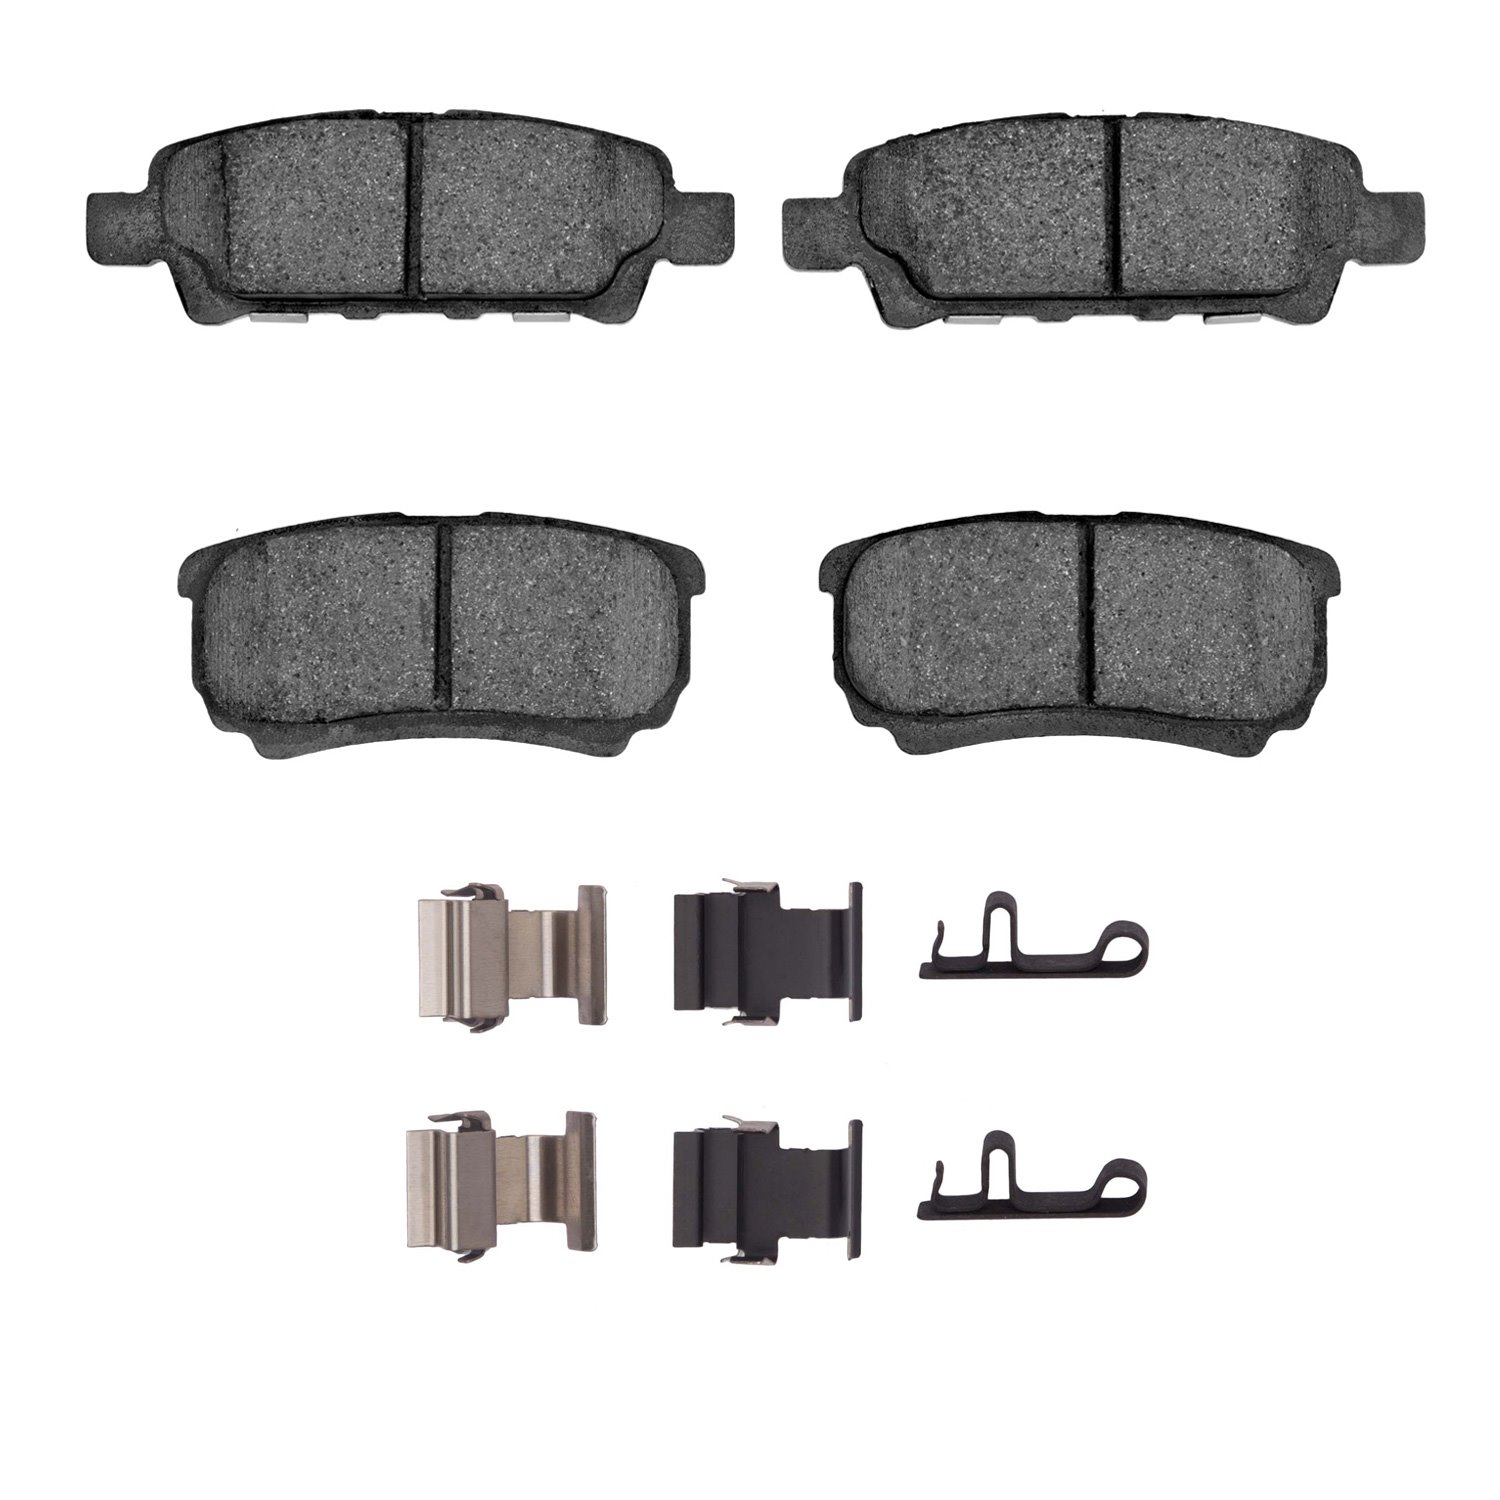 Semi-Metallic Brake Pads & Hardware Kit, 2004-2017 Fits Multiple Makes/Models, Position: Rear